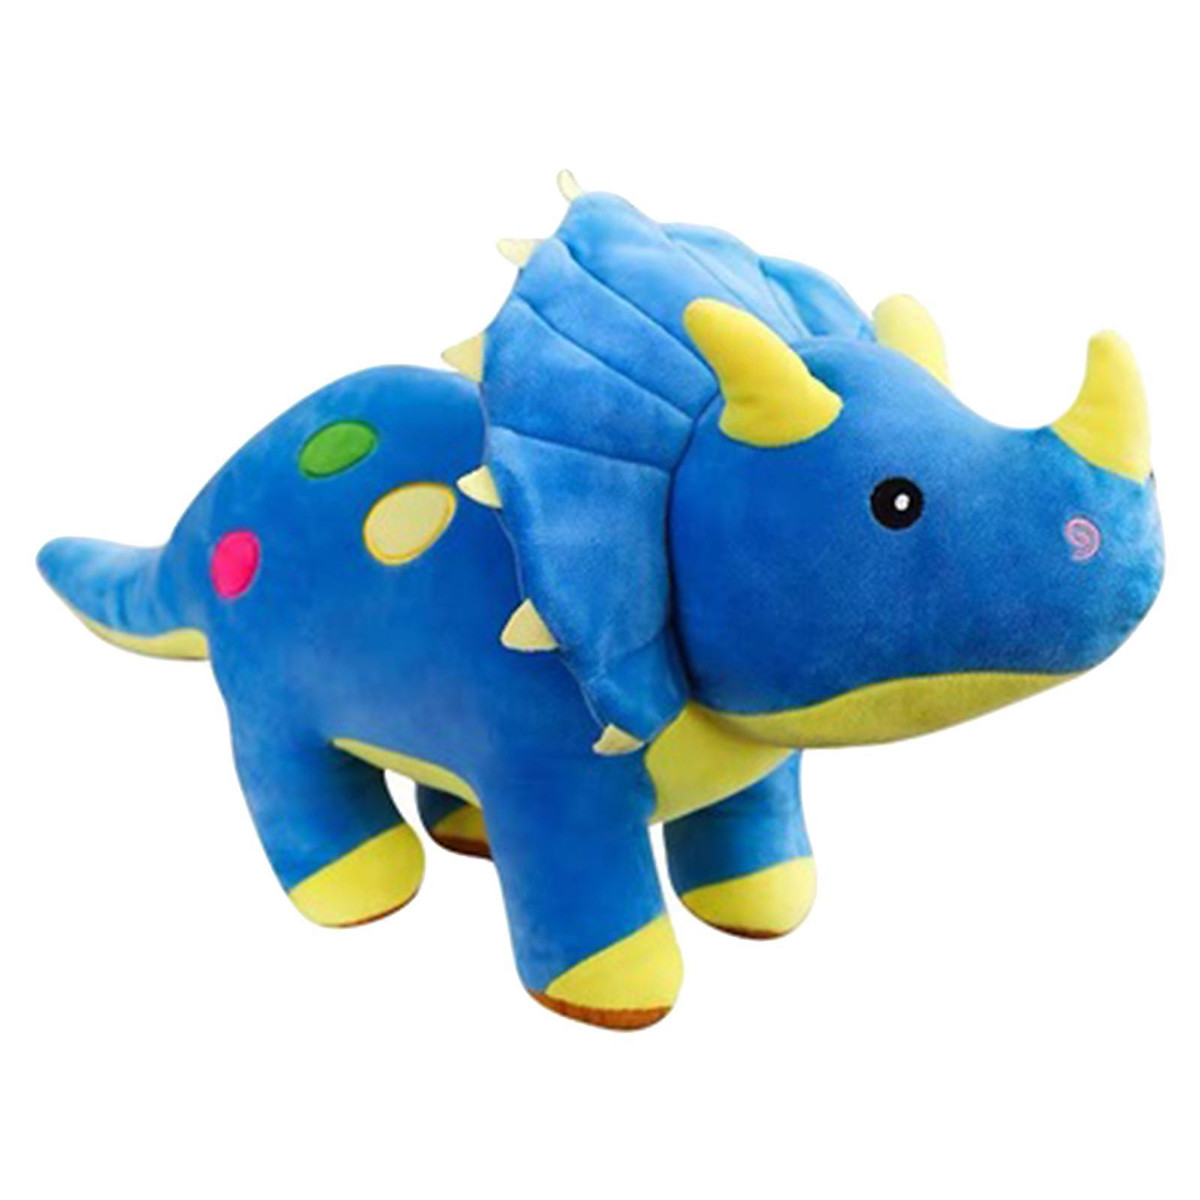 Cute Dinosaur Doll Plush Soft Stuffed Animal Toys 40cm Kids Gift Large New  blue